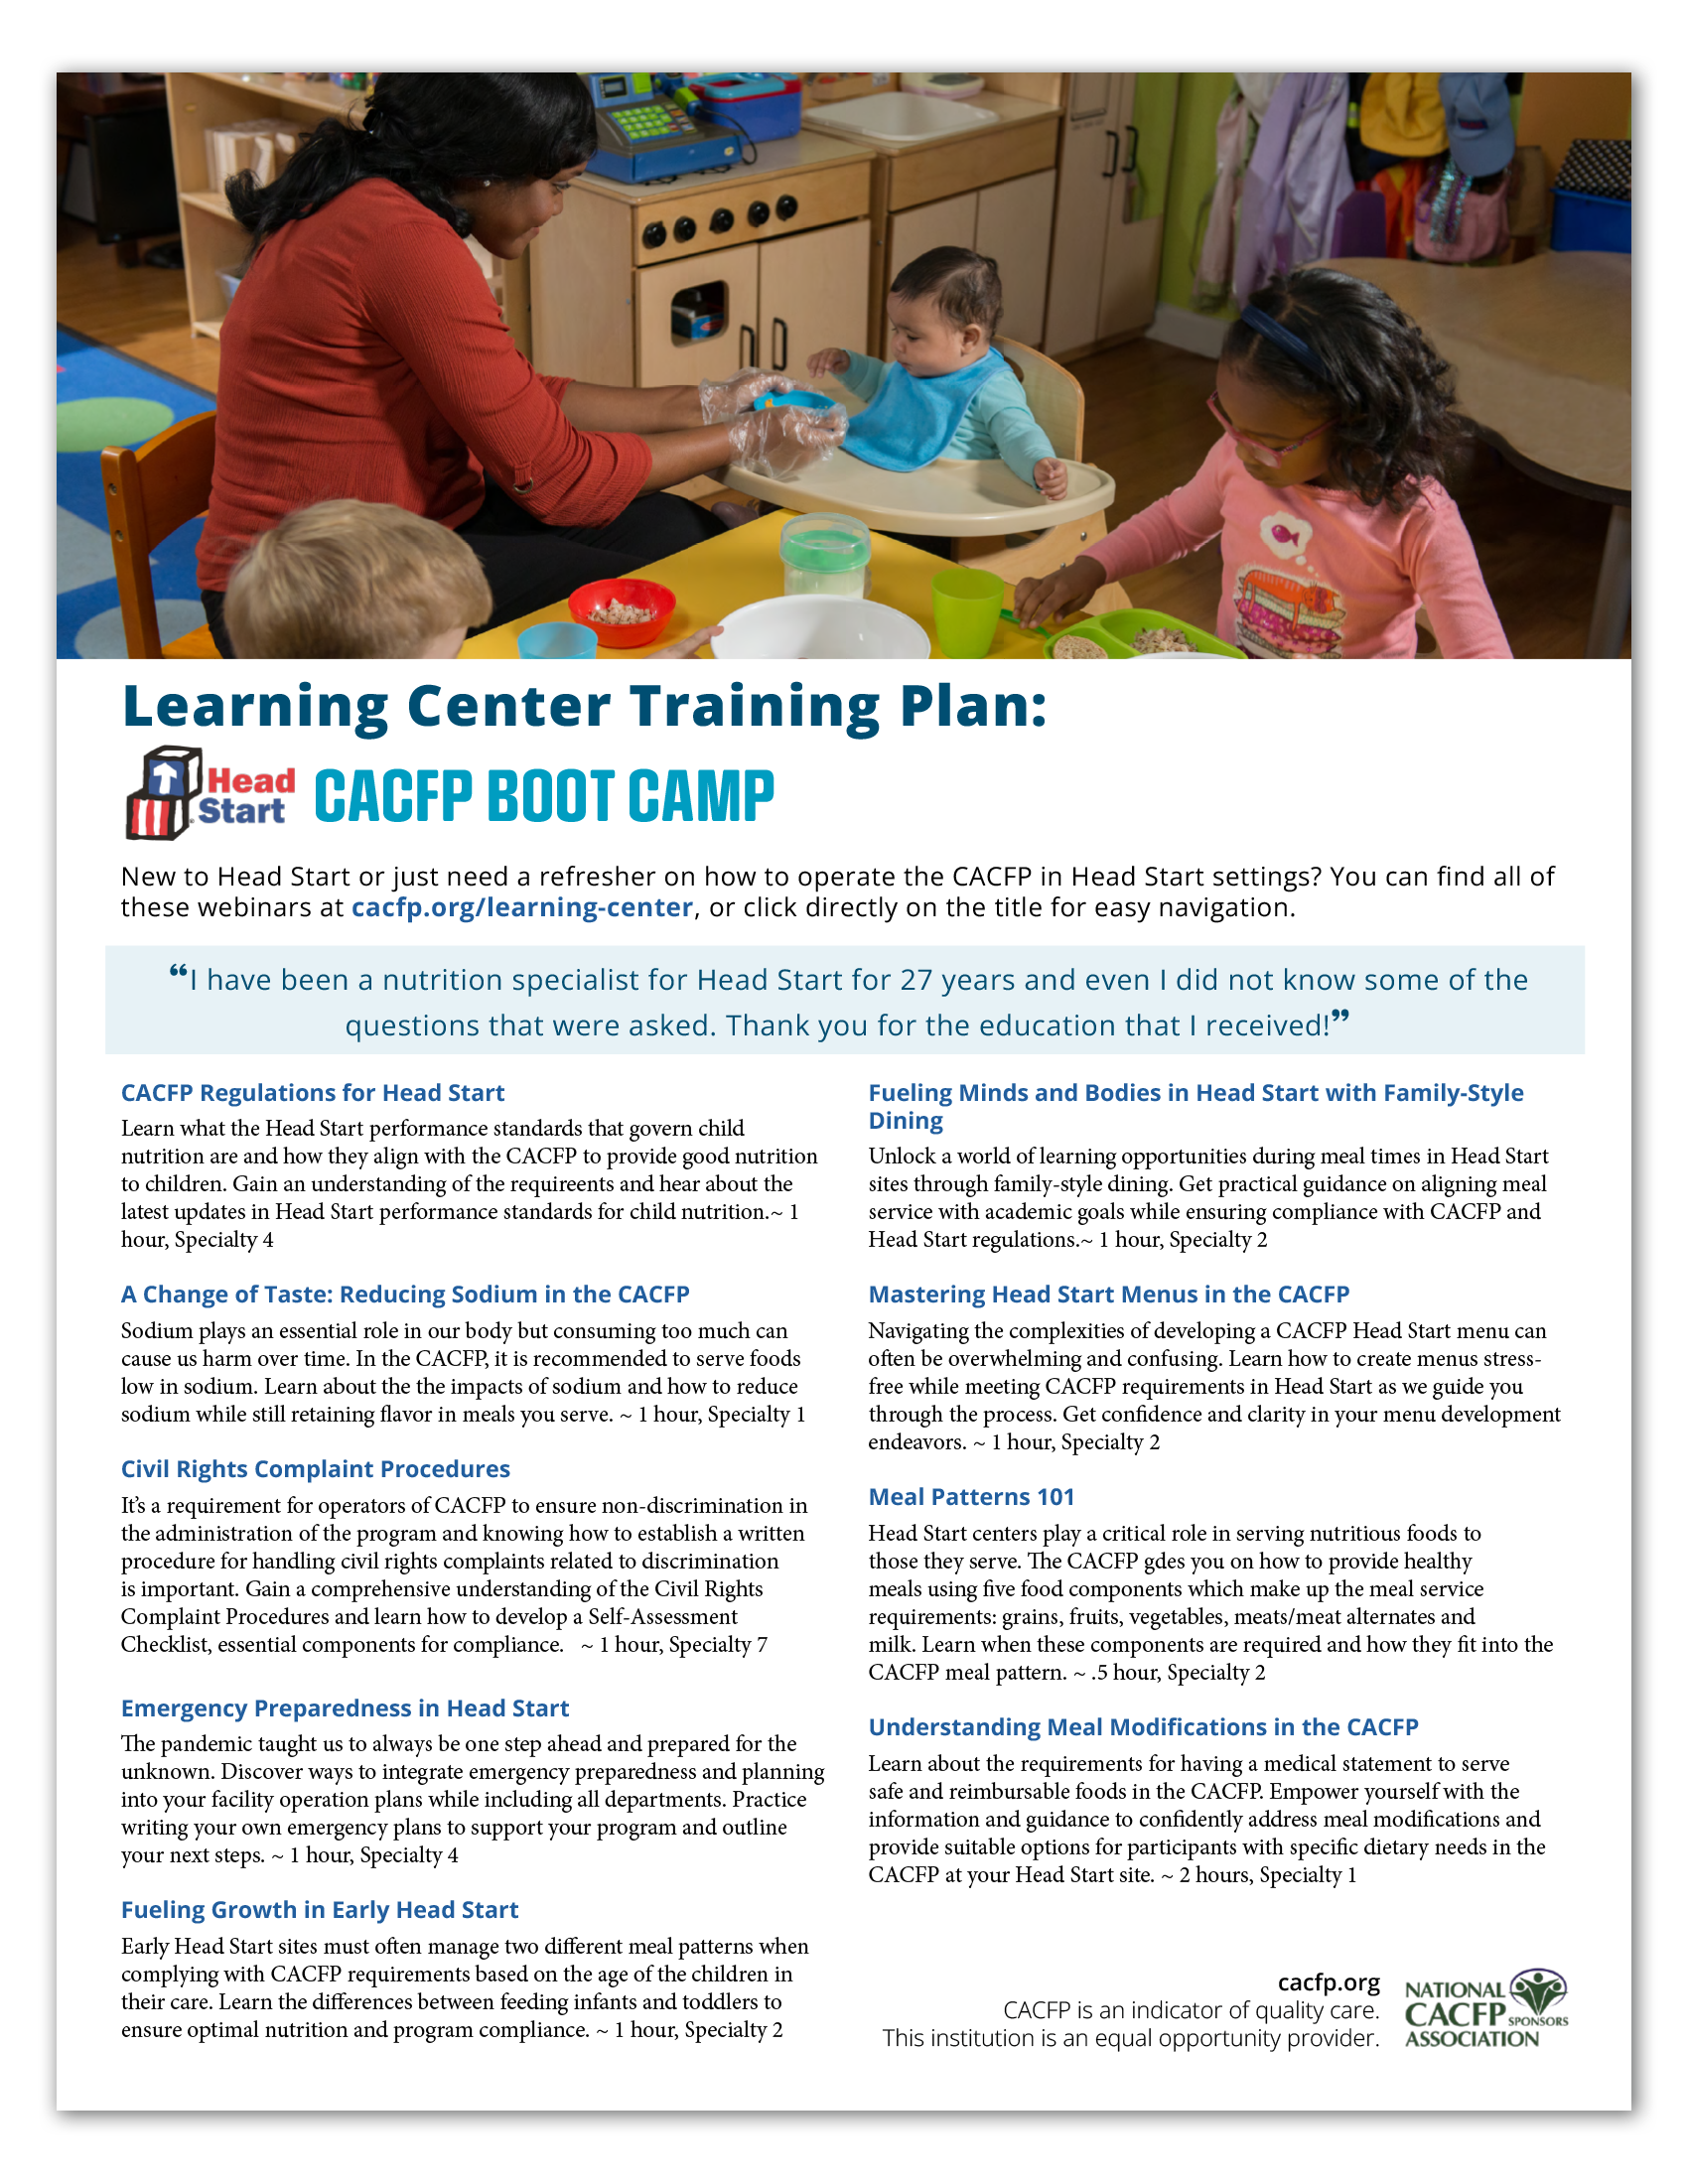 Head Start CACFP Boot Camp